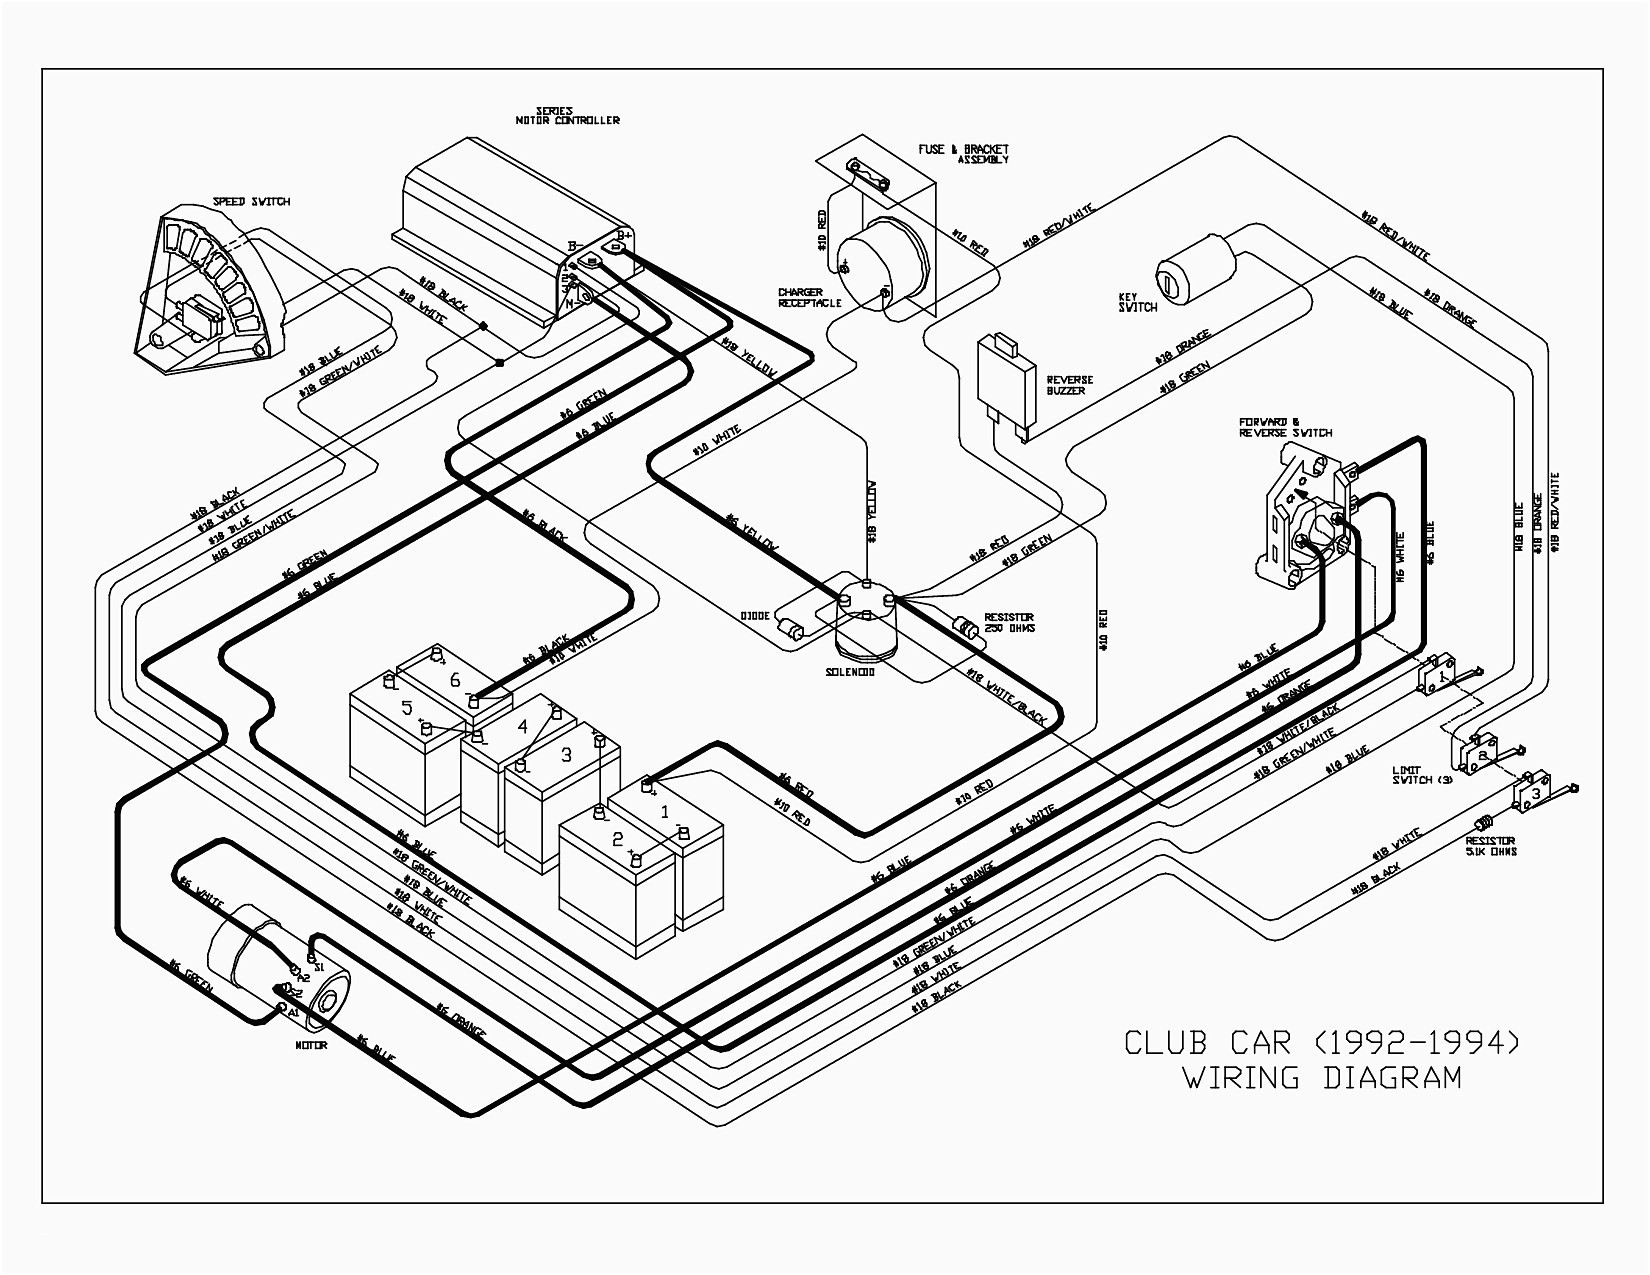 Wiring Diagram for Club Car Starter Generator Save Wiring Diagram for Club Car Precedent New Golf